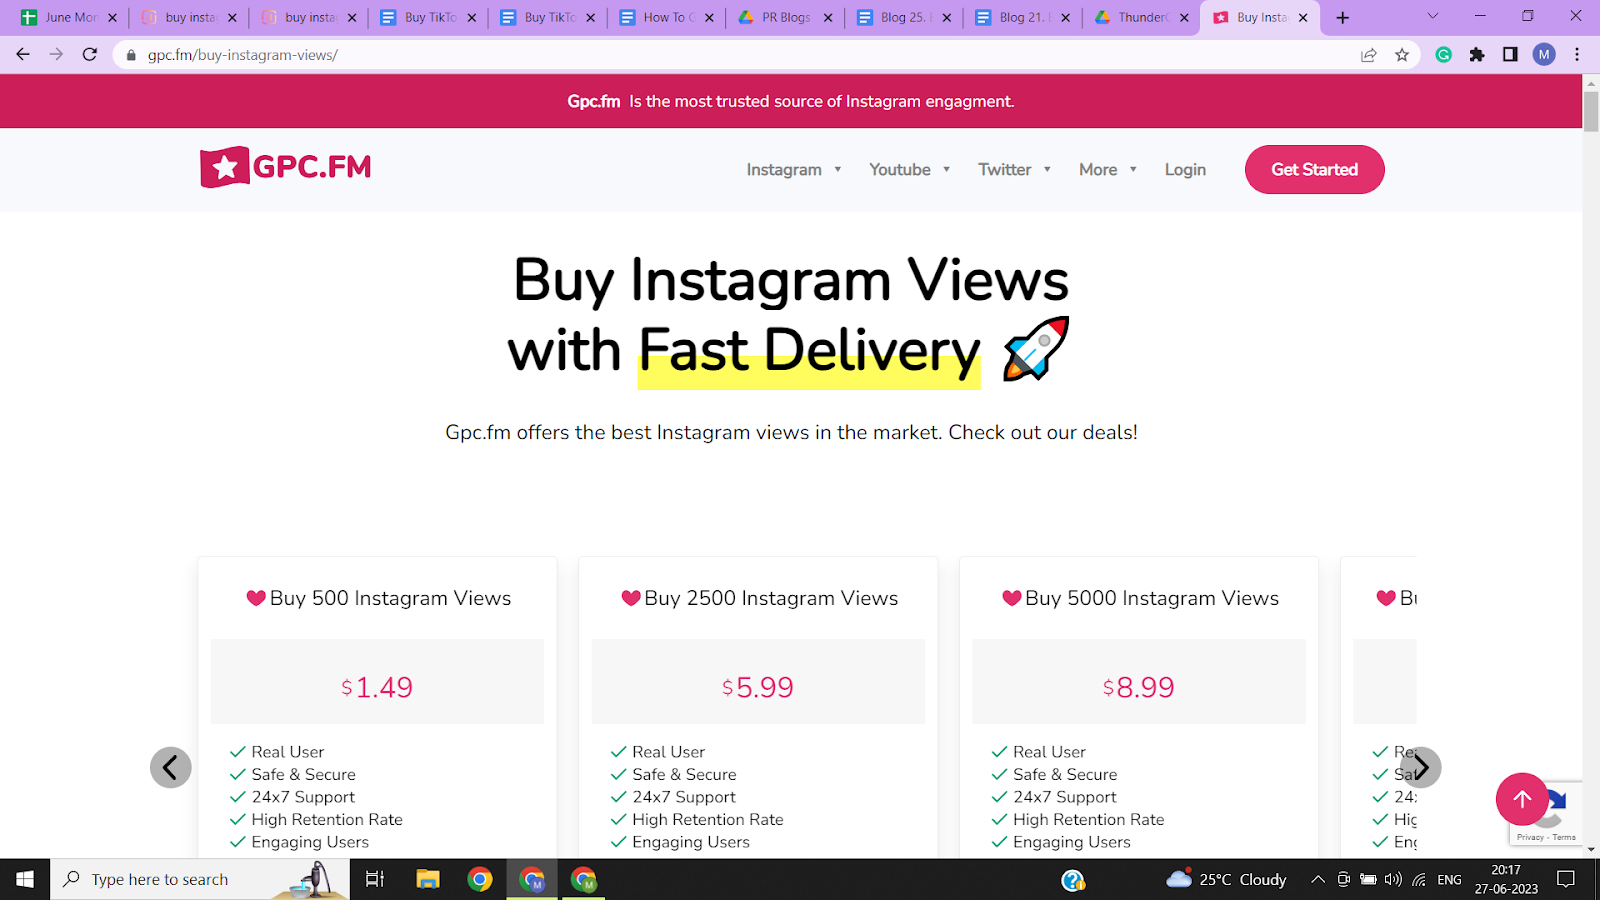 buy instagram views from gpc.fm